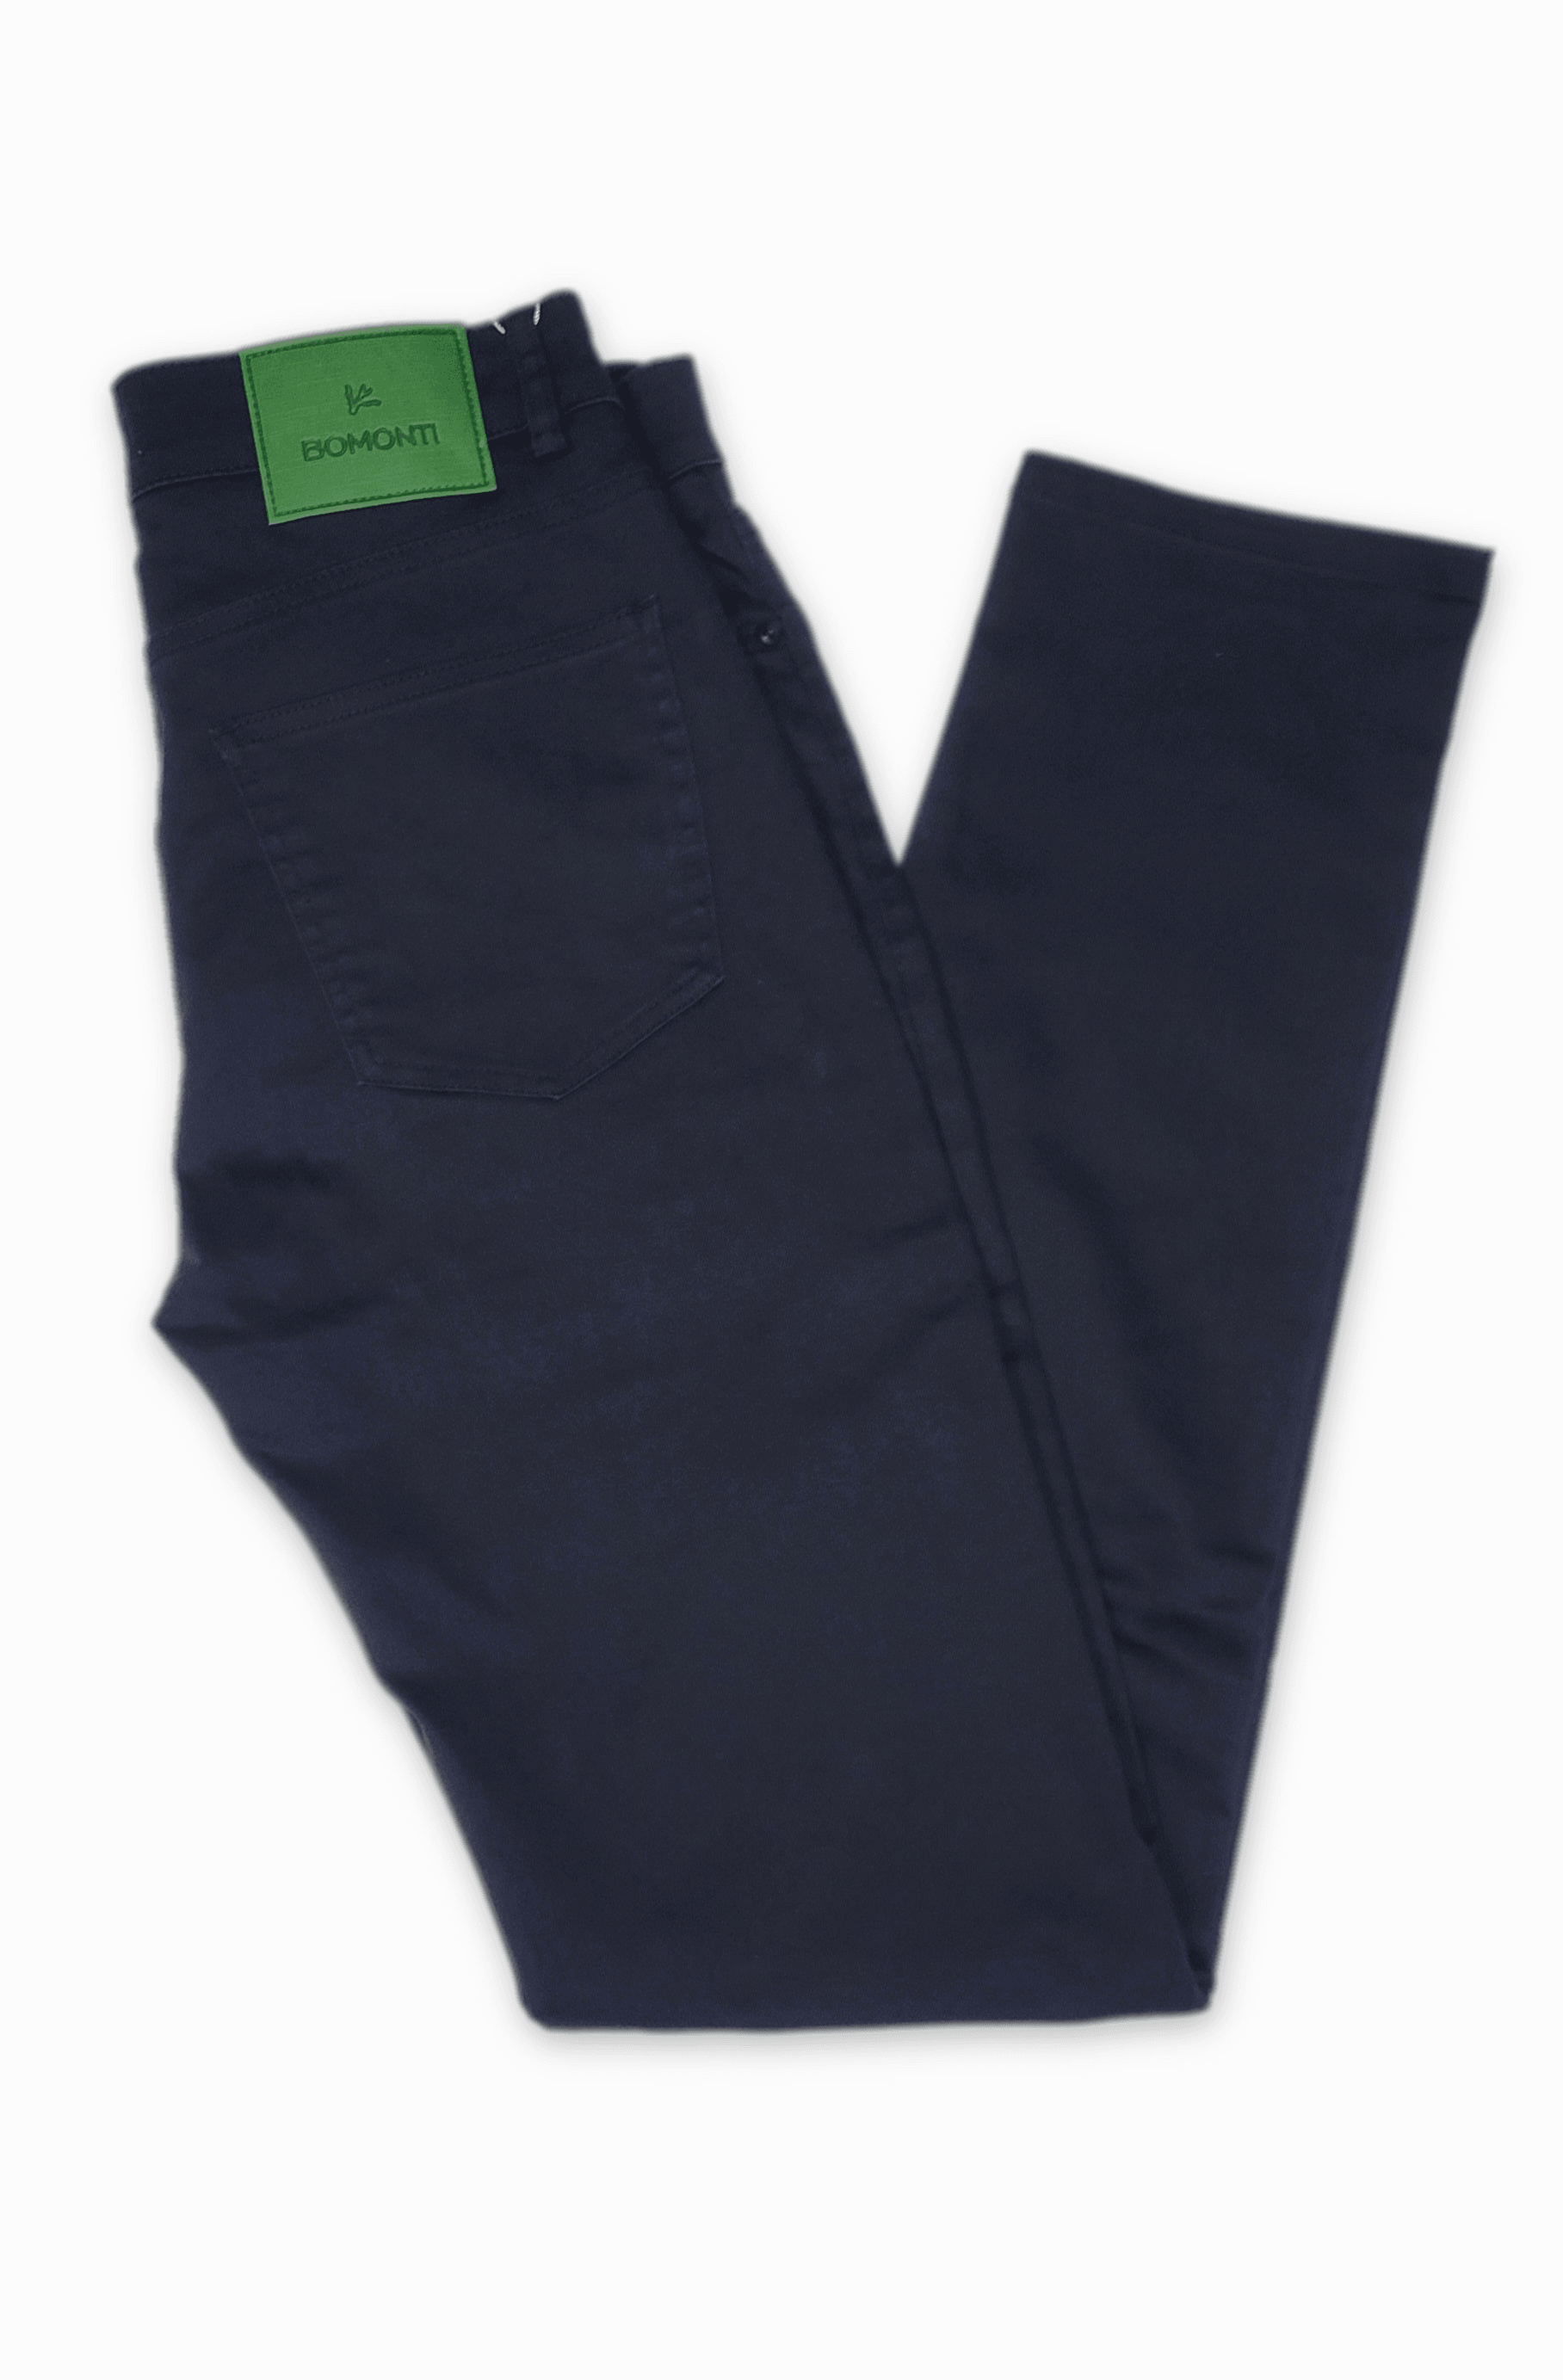 Laflamme- Pantalon 5 poches extensible marine - Differ